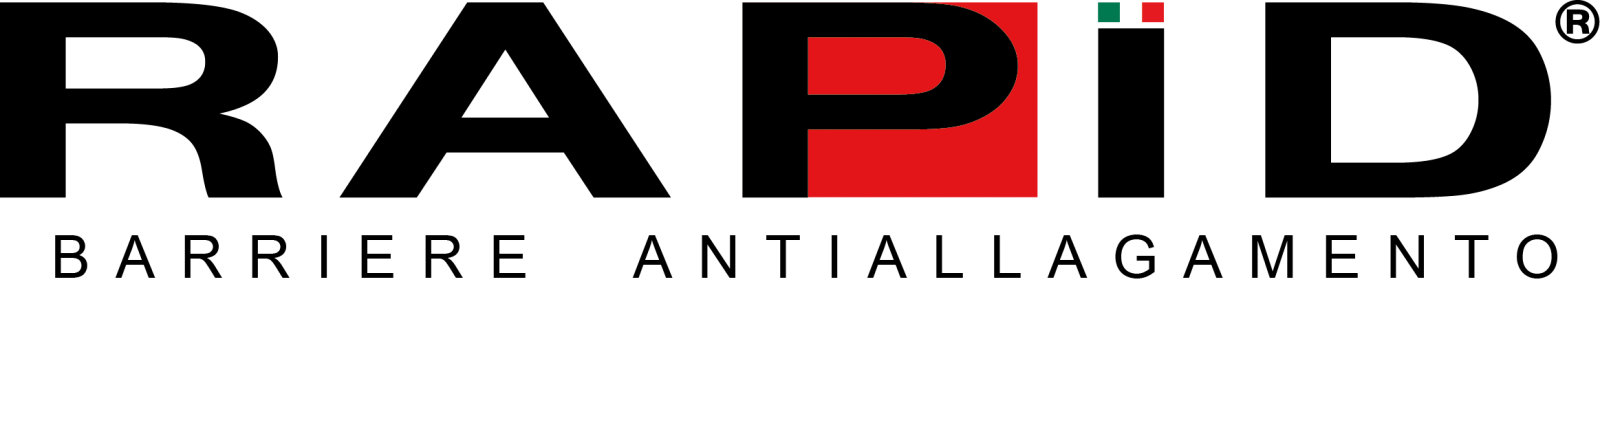 RAPID Barriere Antiallagamento Logo